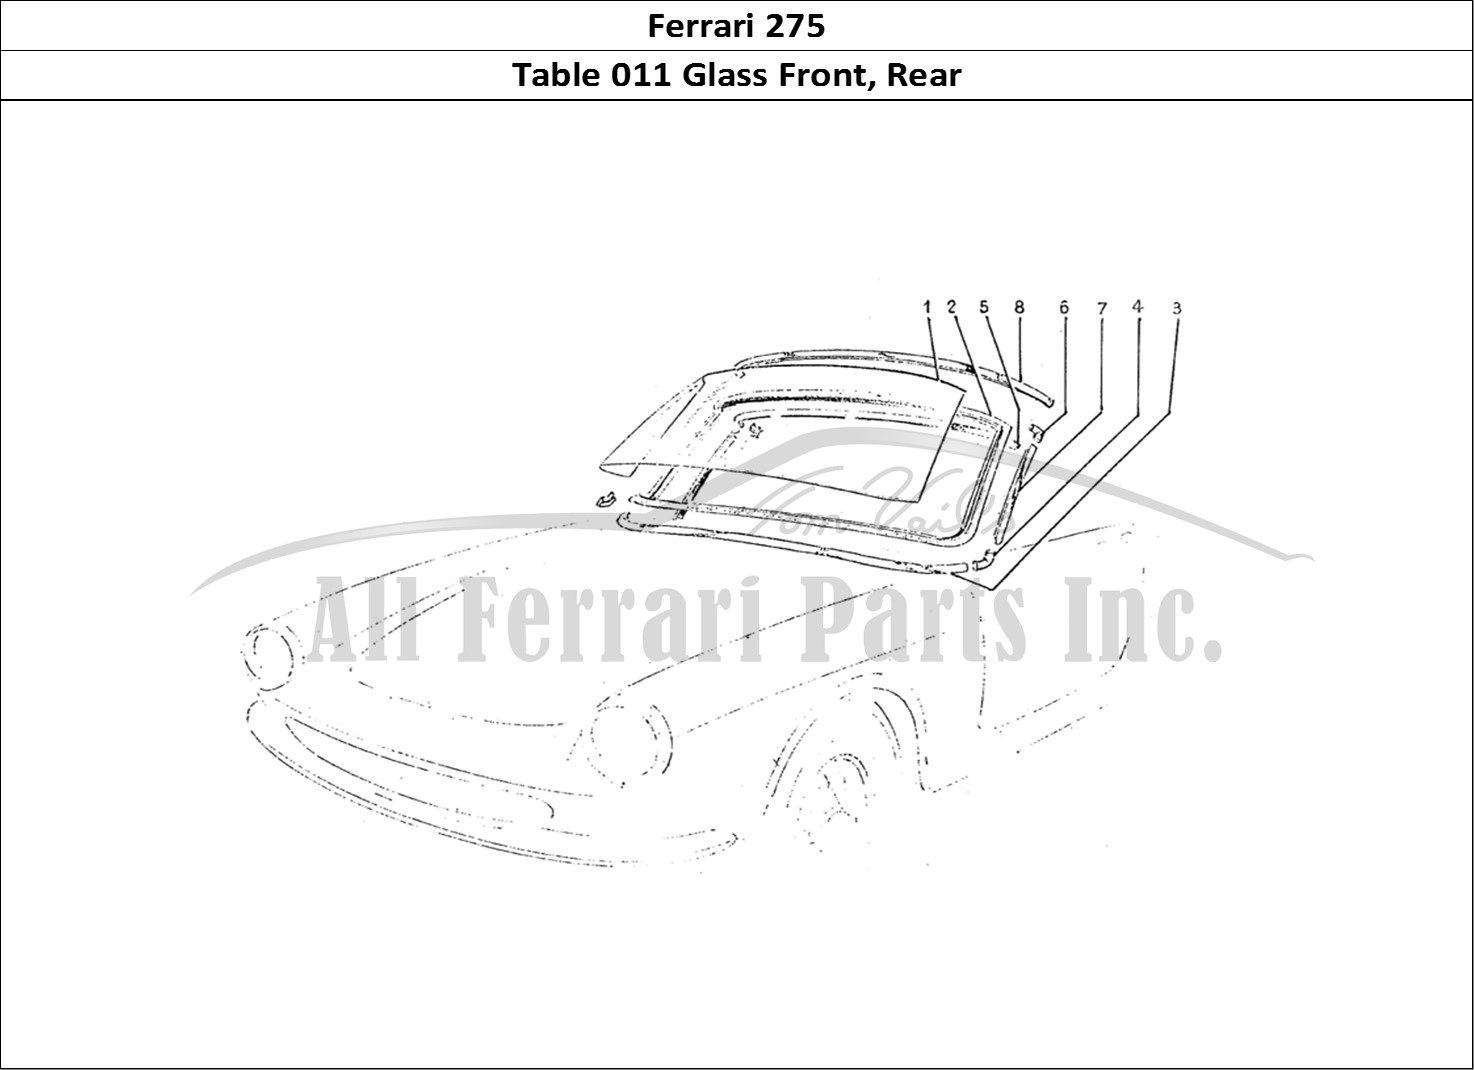 Ferrari Parts Ferrari 275 (Pininfarina Coachwork) Page 011 Front & Rear Glass